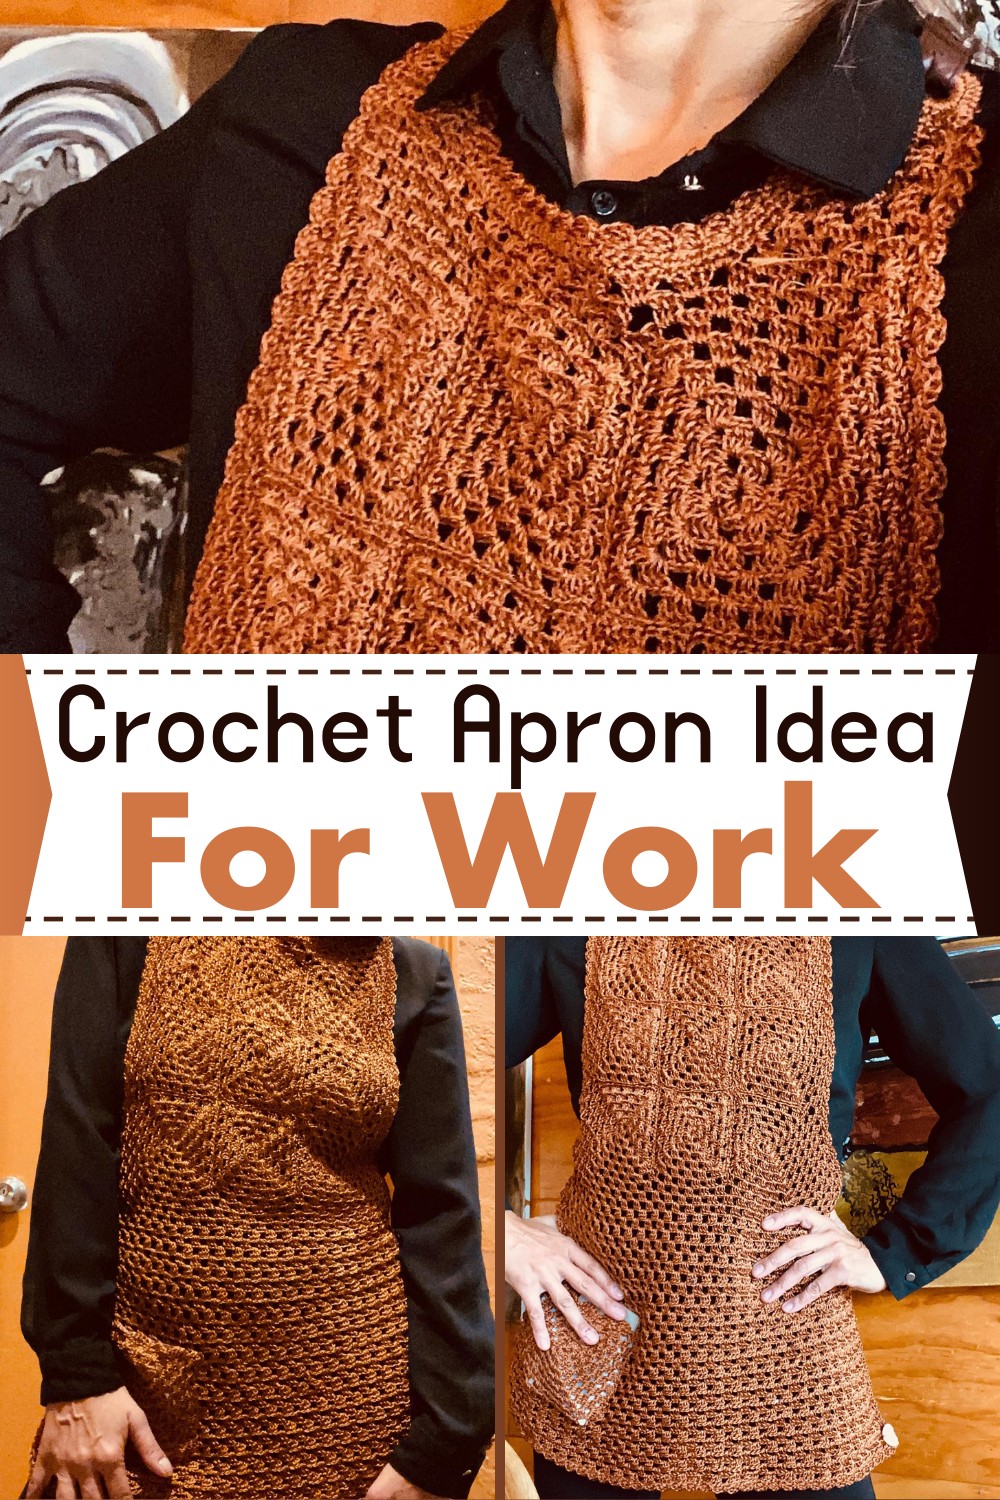 Crochet Apron Idea For Work